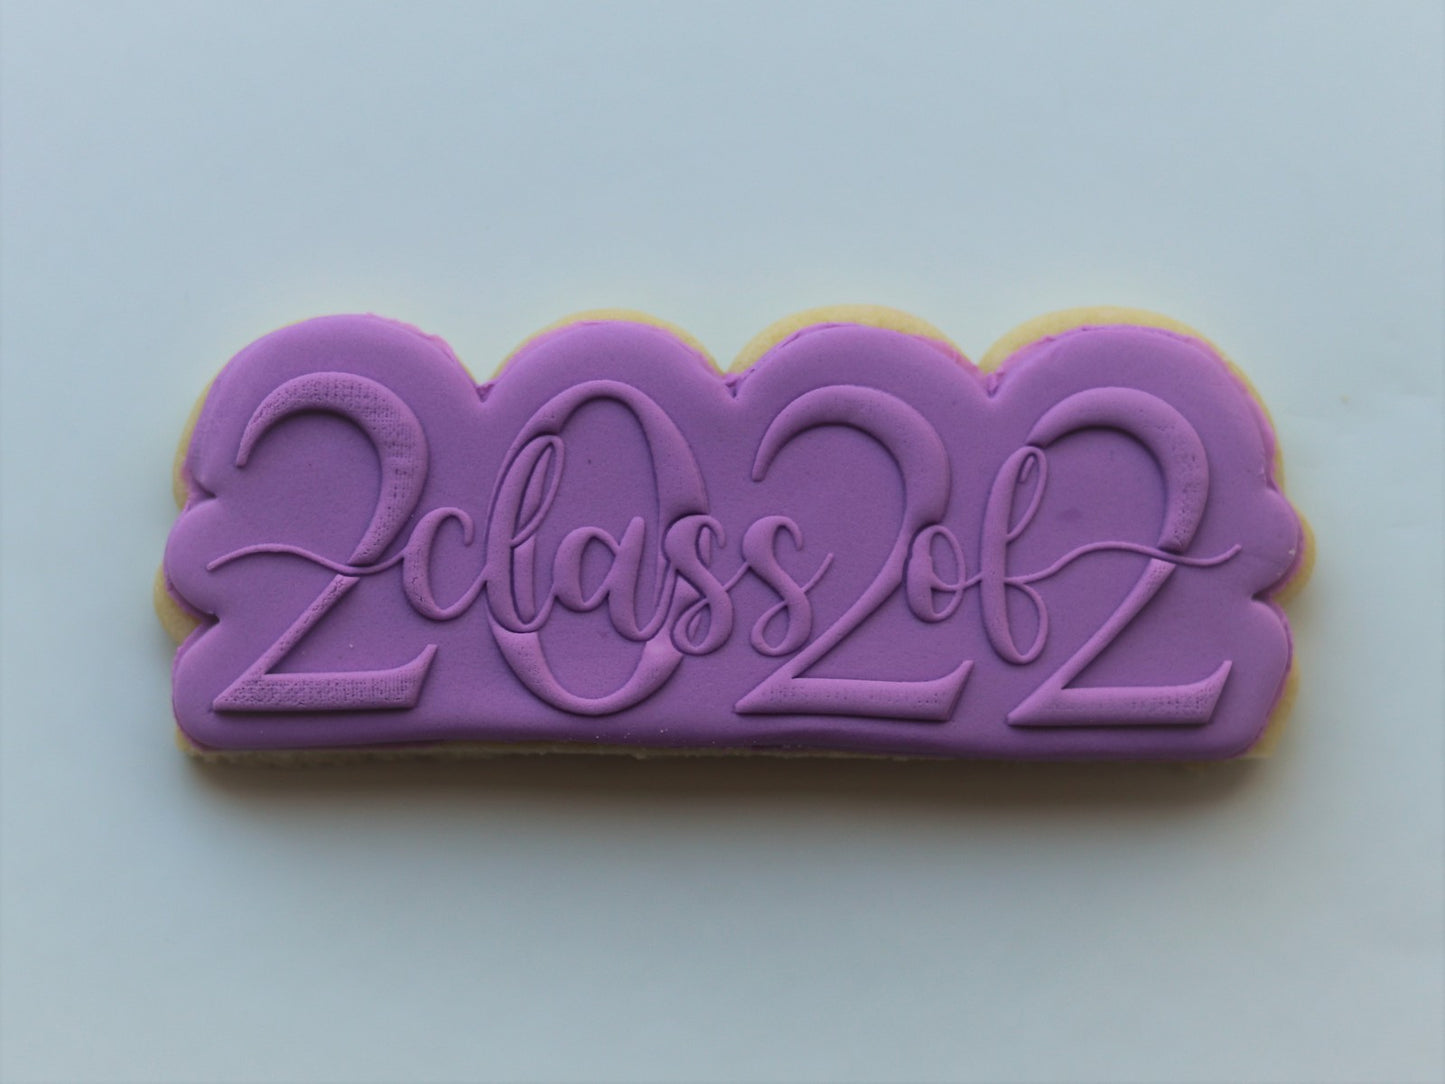 "class of 2022" - Raised Embosser Set